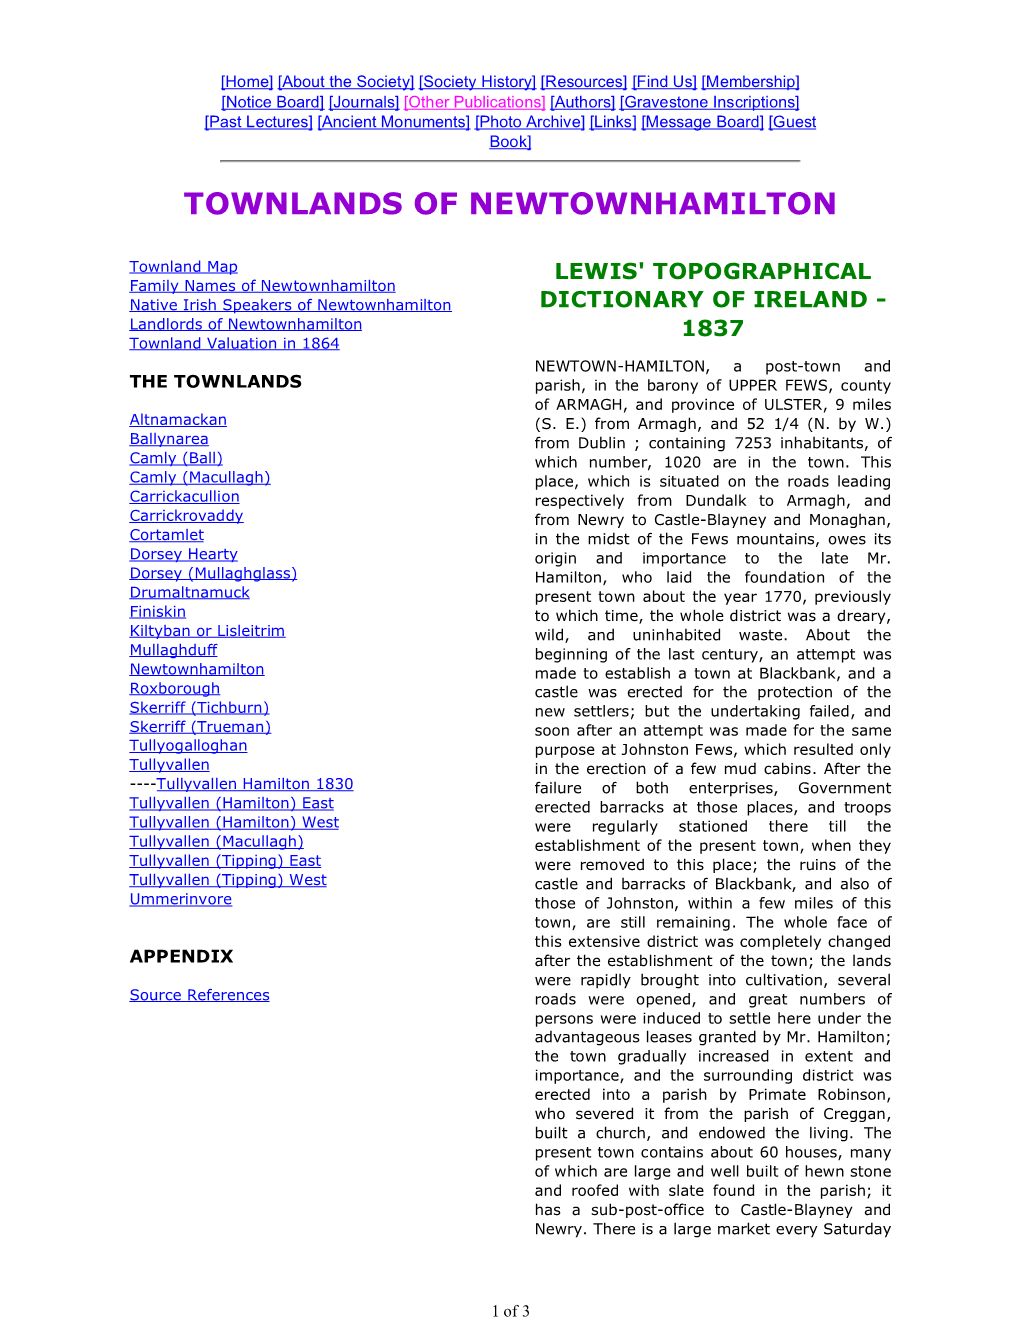 Townlands of Newtownhamilton